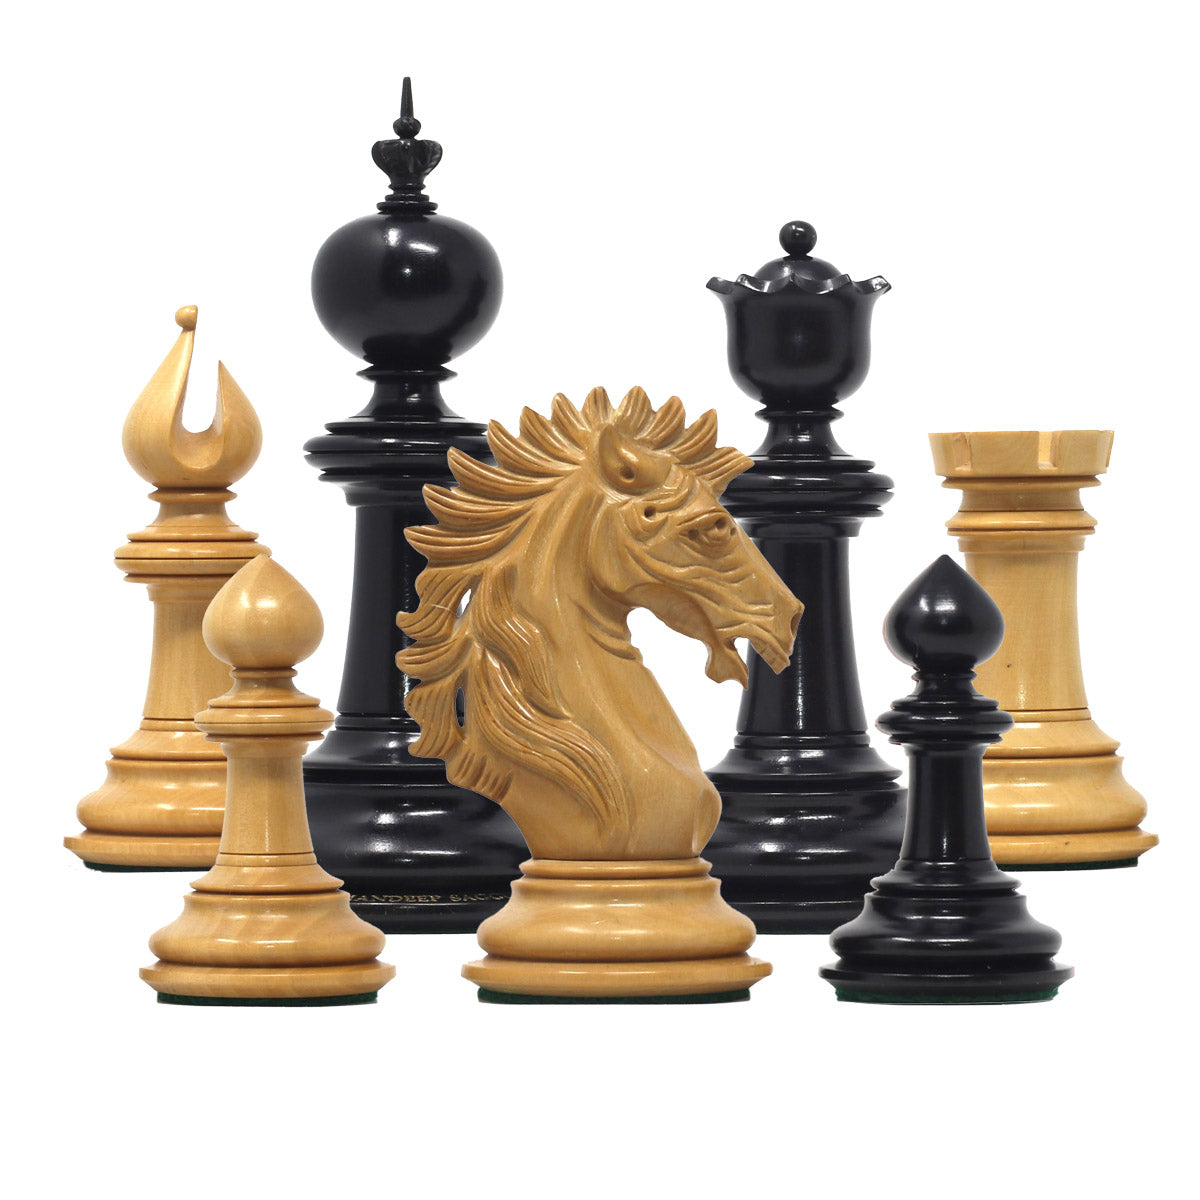 Chess 4 (4 Player Chess) – Fancy Chess